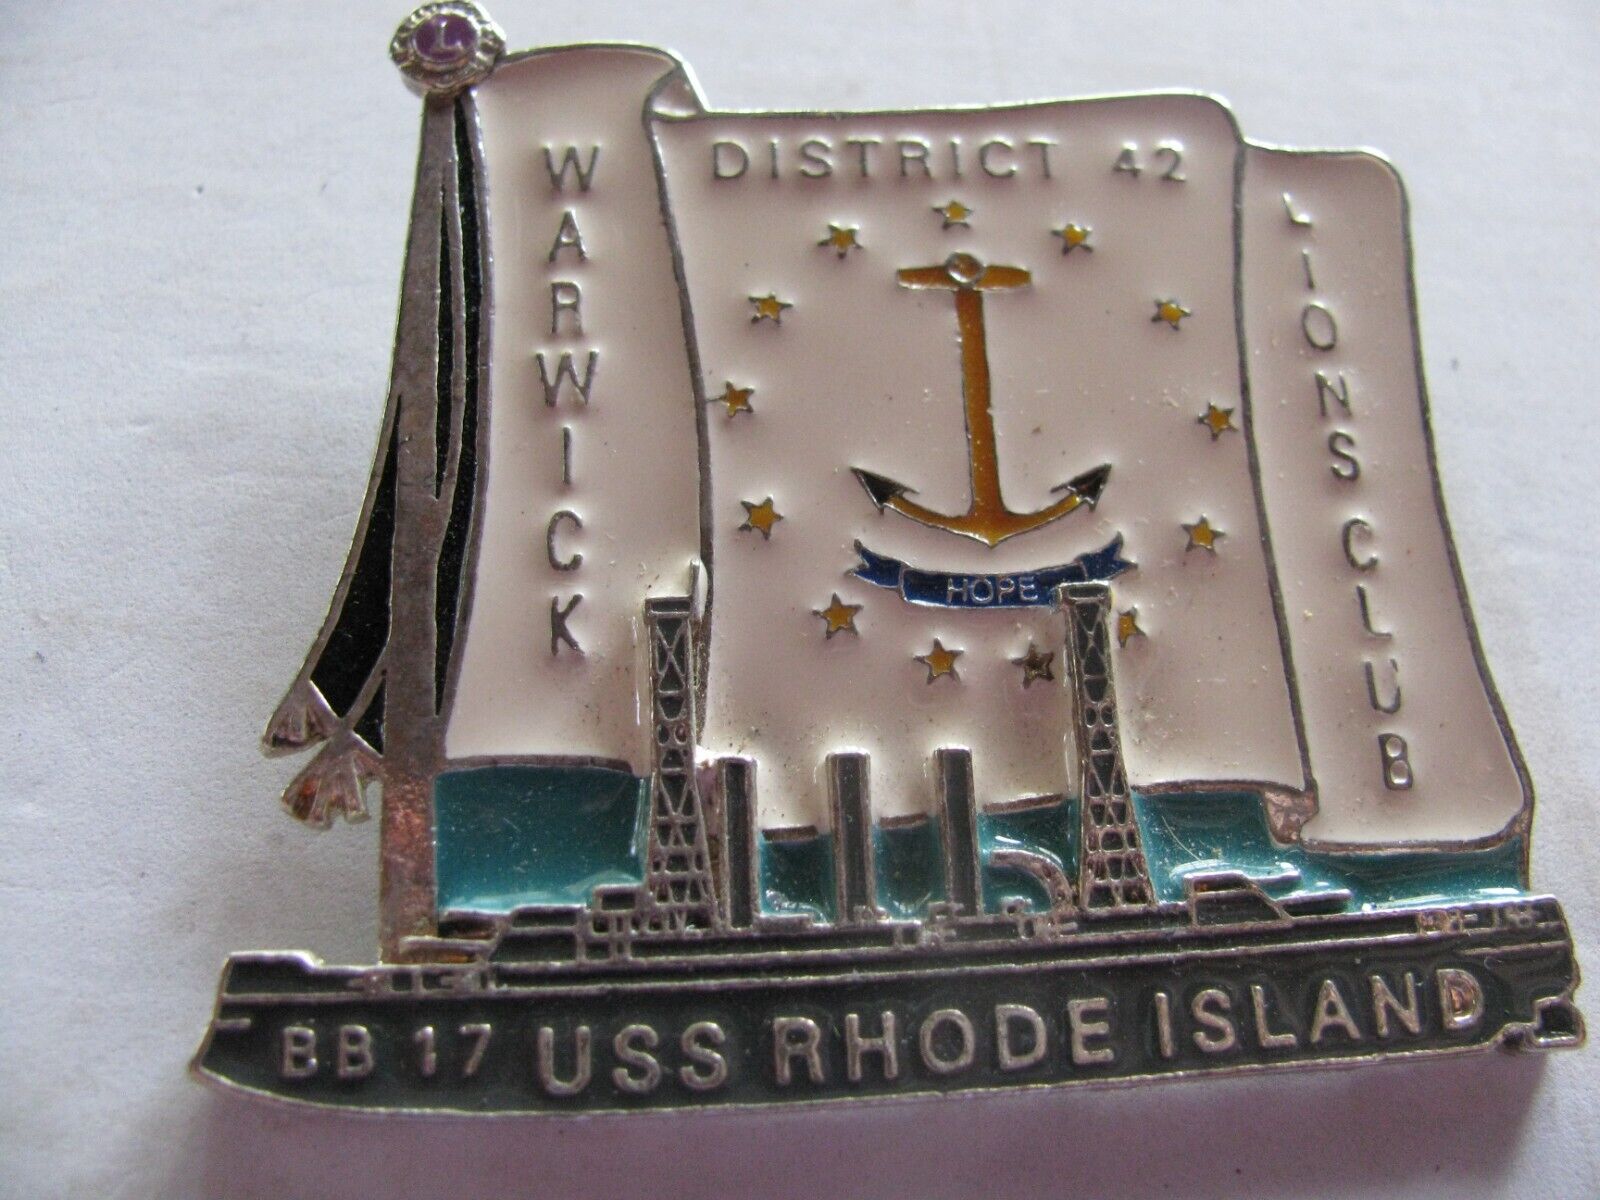 LIONS CLUB PIN -  PIN TRADER  USS RHODE ISLAND  BB-17 HISTORIC BATTLESHIP SERIES